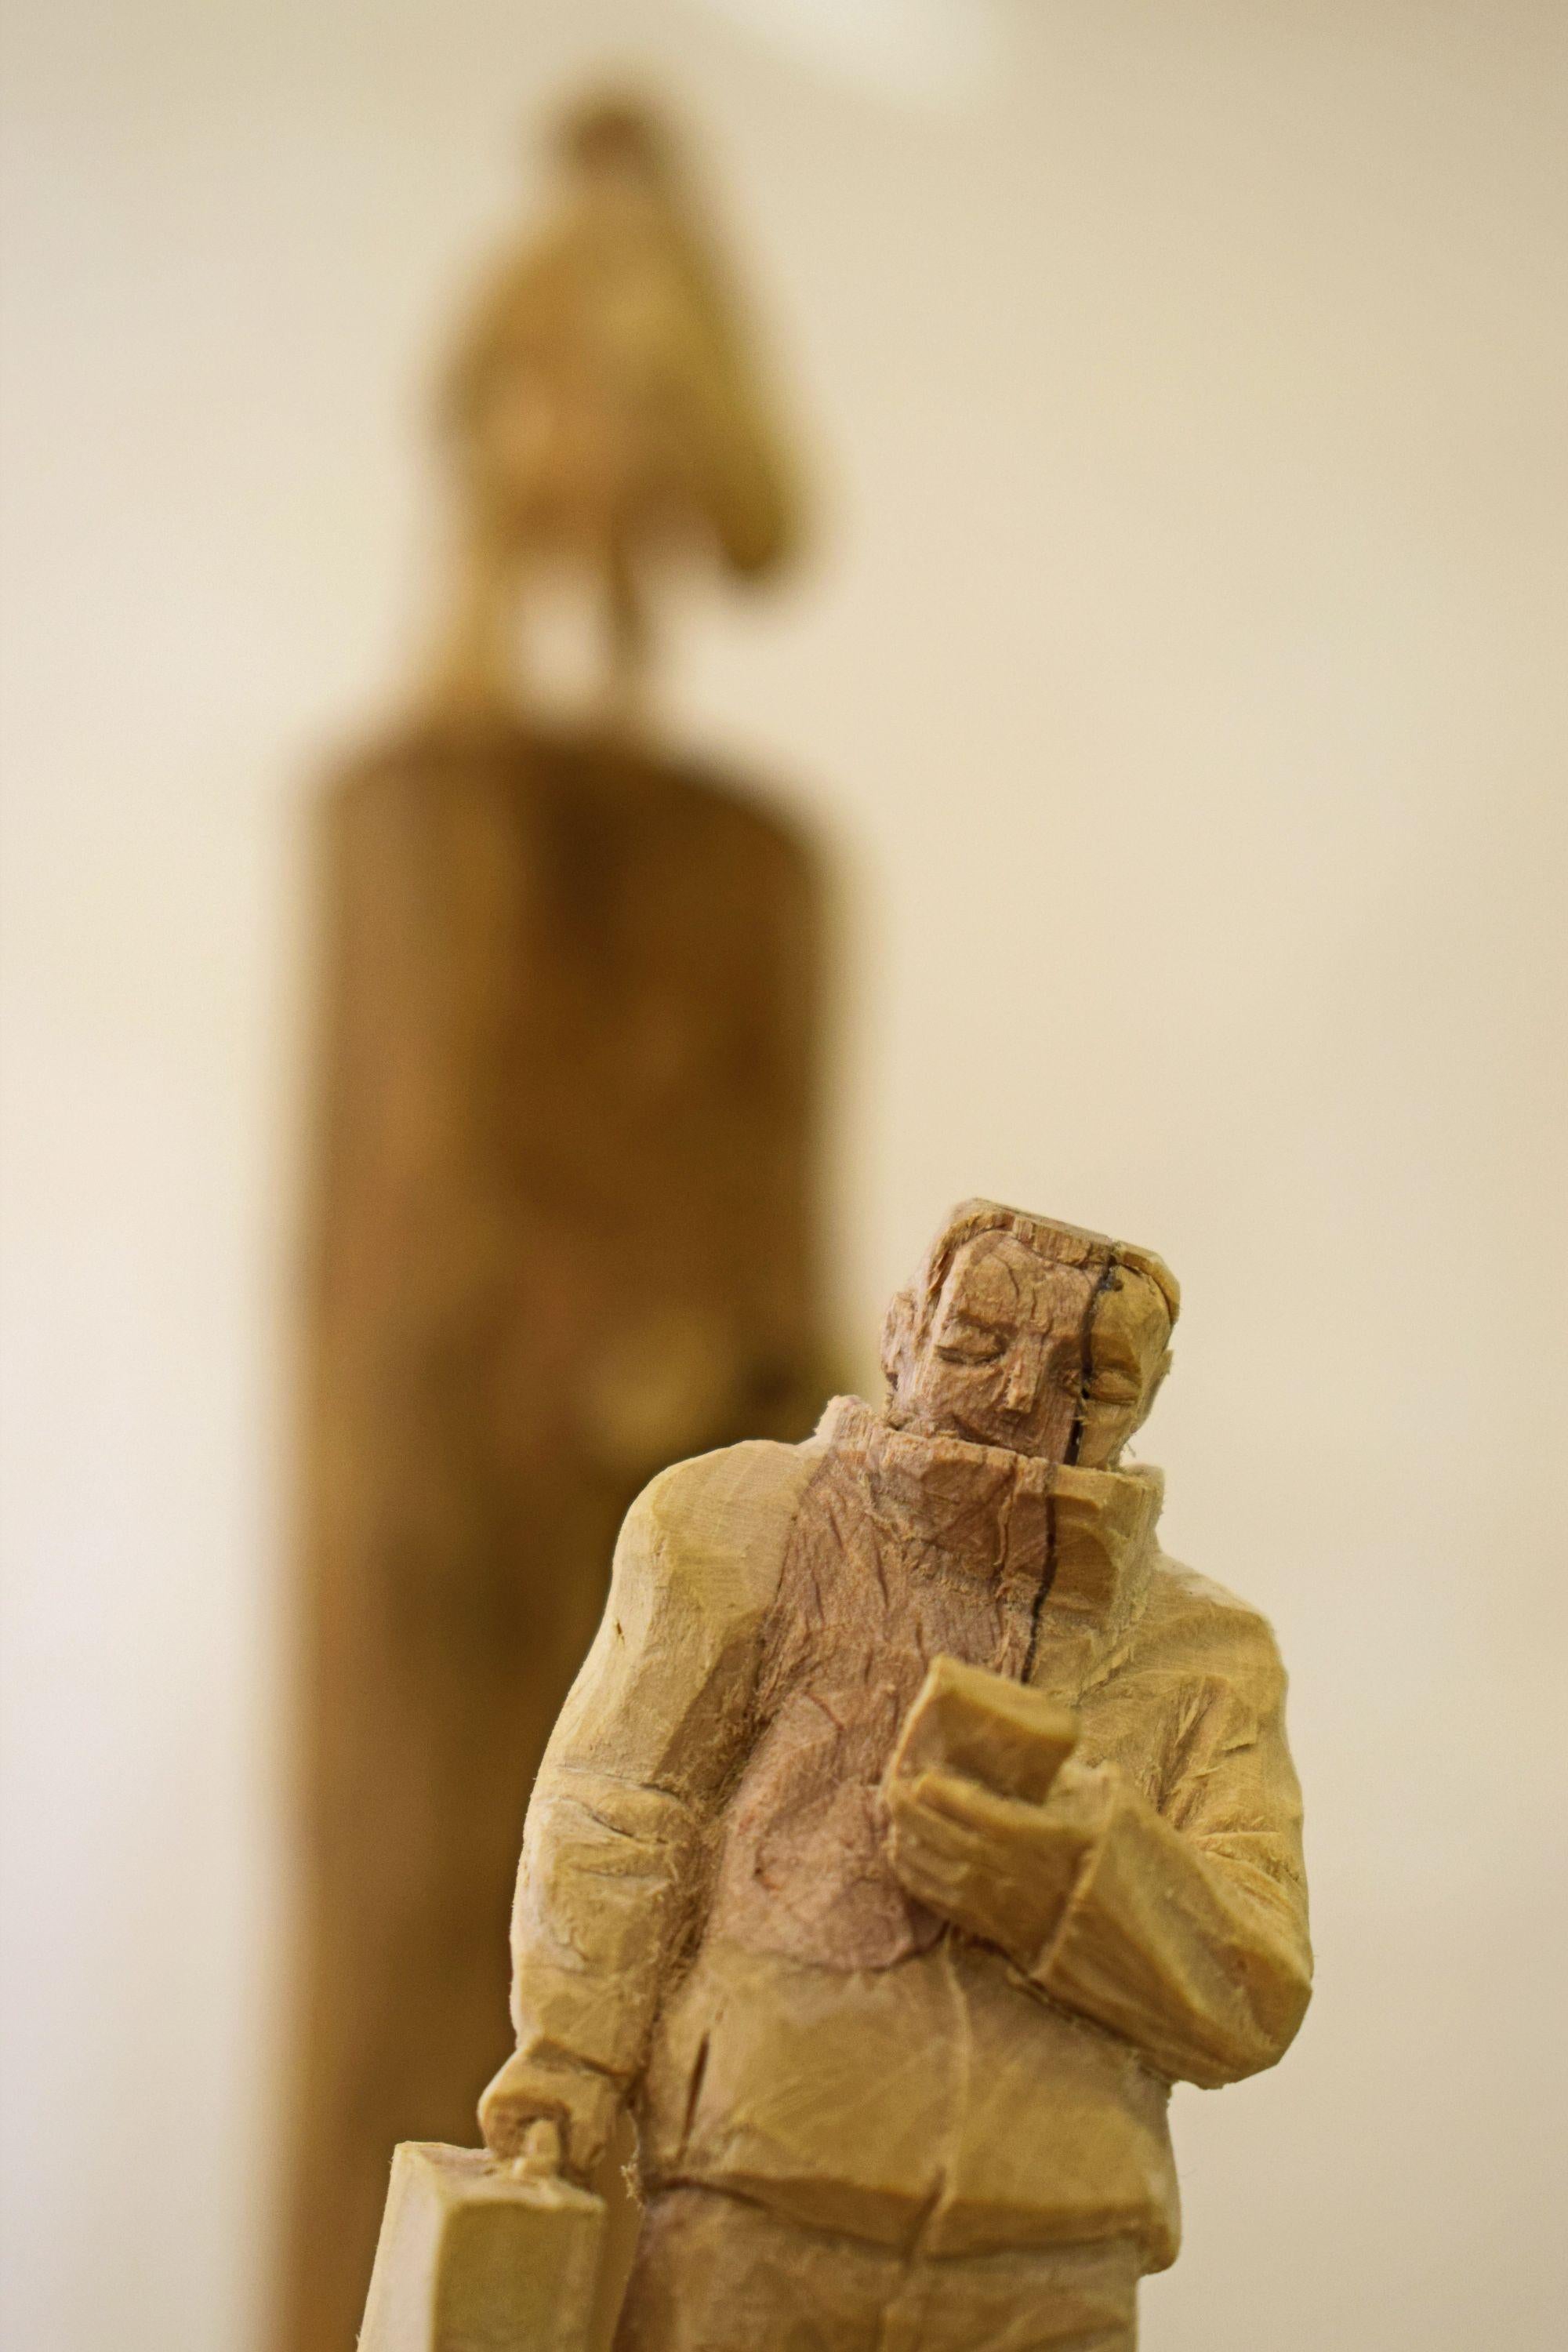 Communication - Wood sculpture, figurative sculpture, wood carving - Sculpture by Philipp Liehr